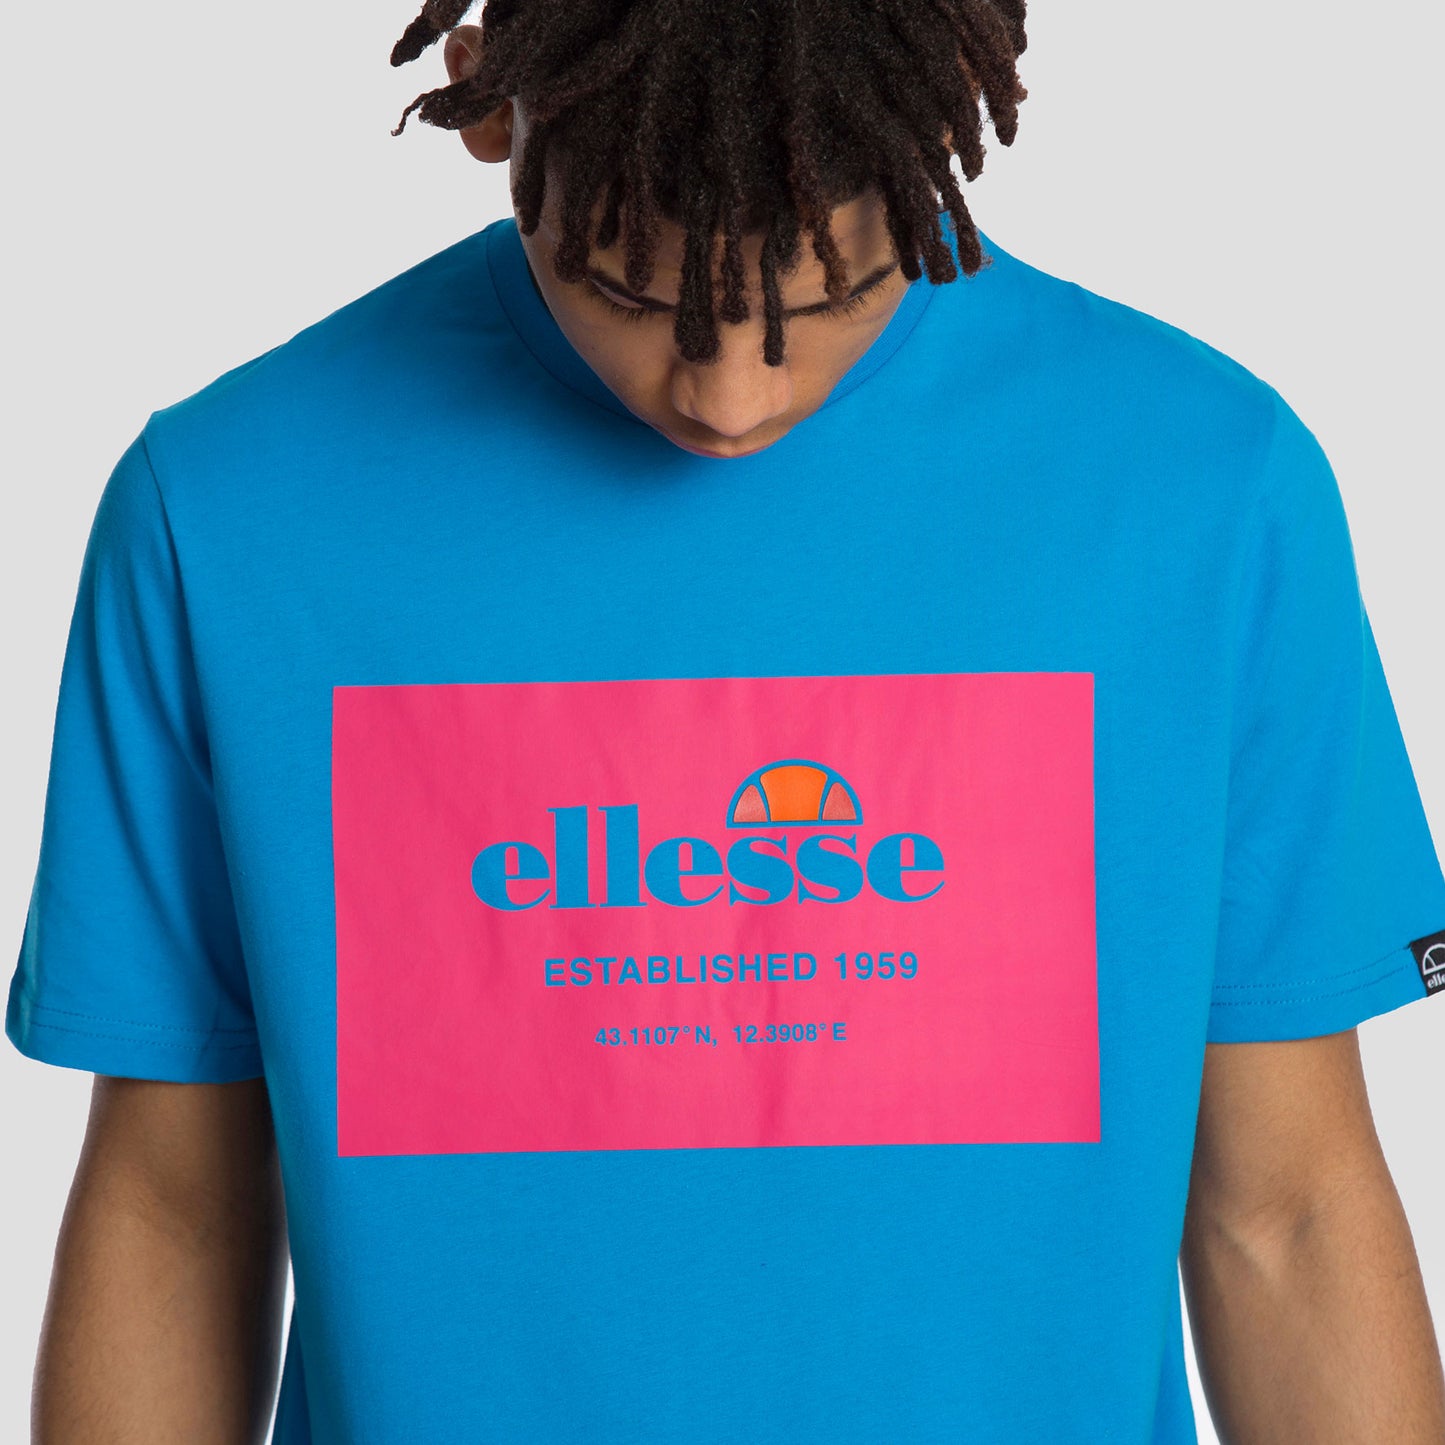 Ellesse Camiseta Grosso - SHE08561 - Colección Chico